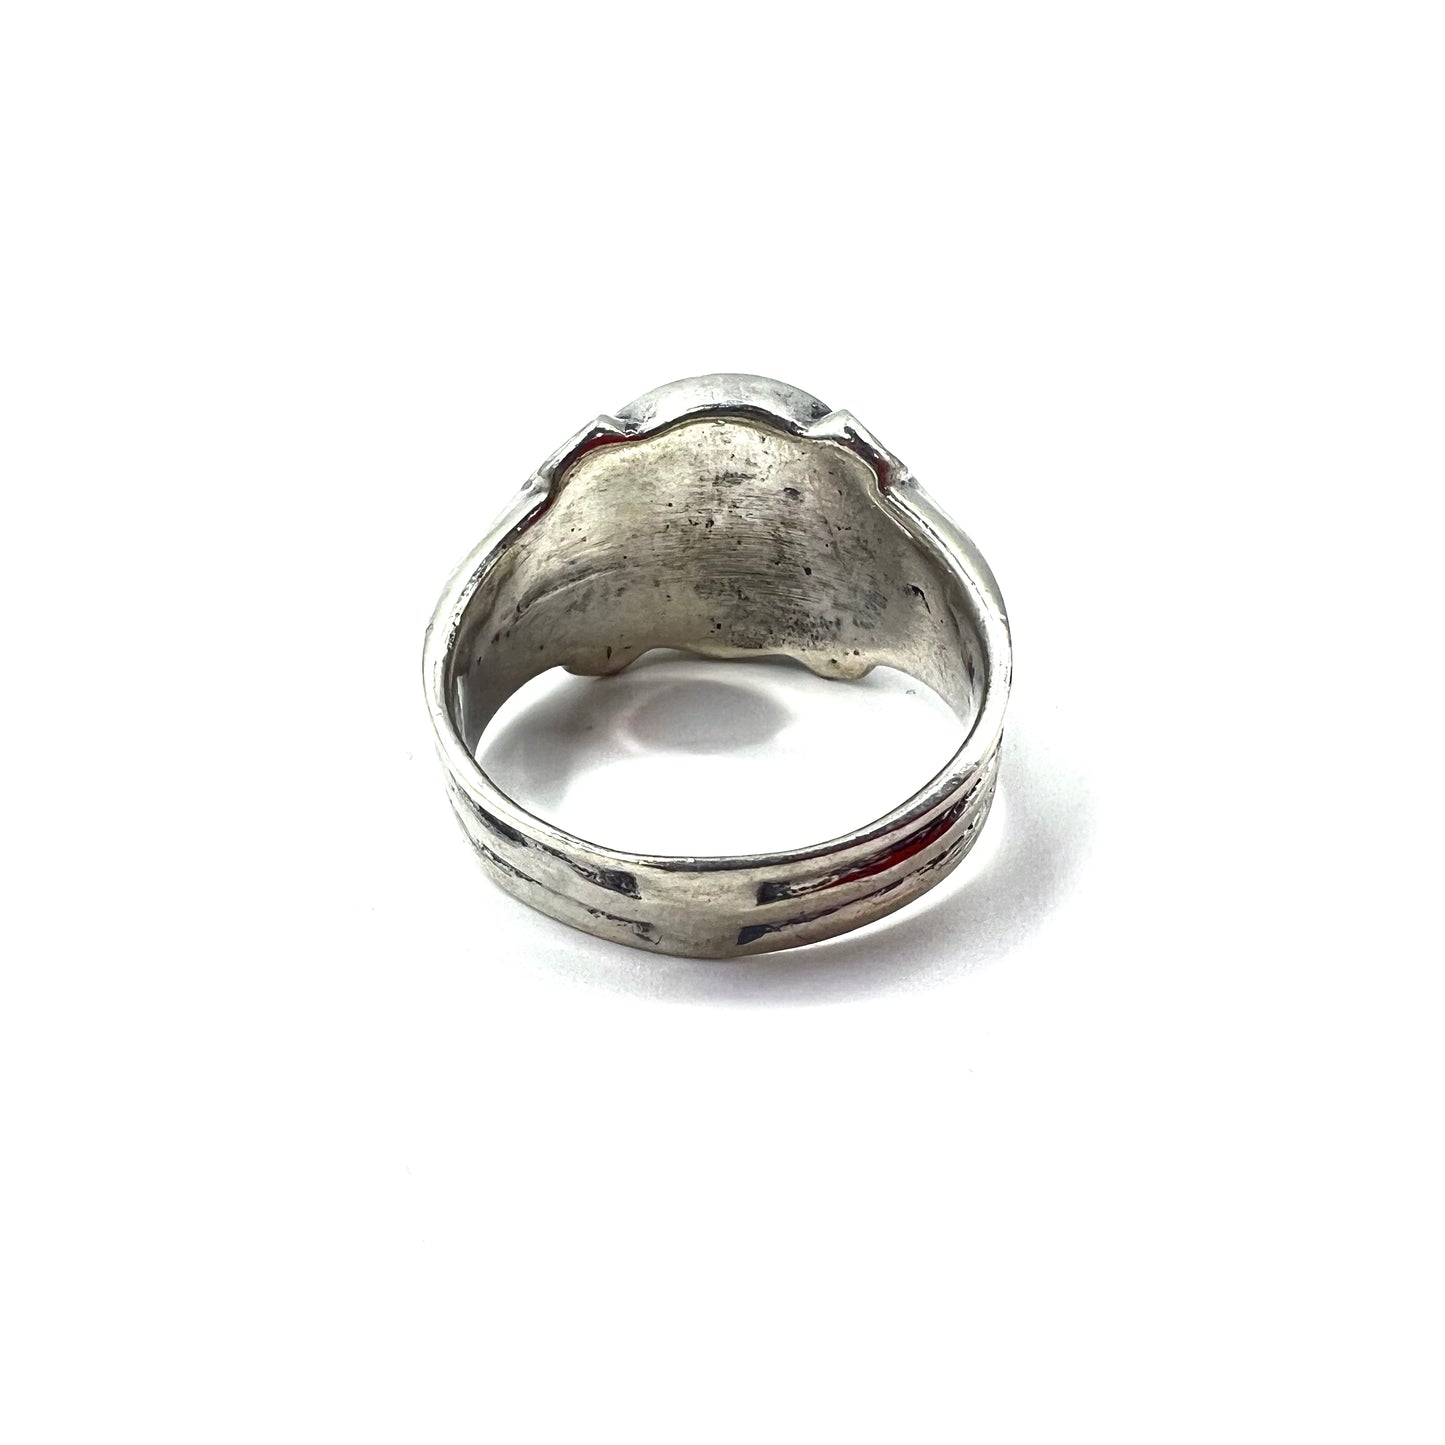 Vintage Silver Ring スチームパンク シルバーリング 指輪 22号 SILVER 925